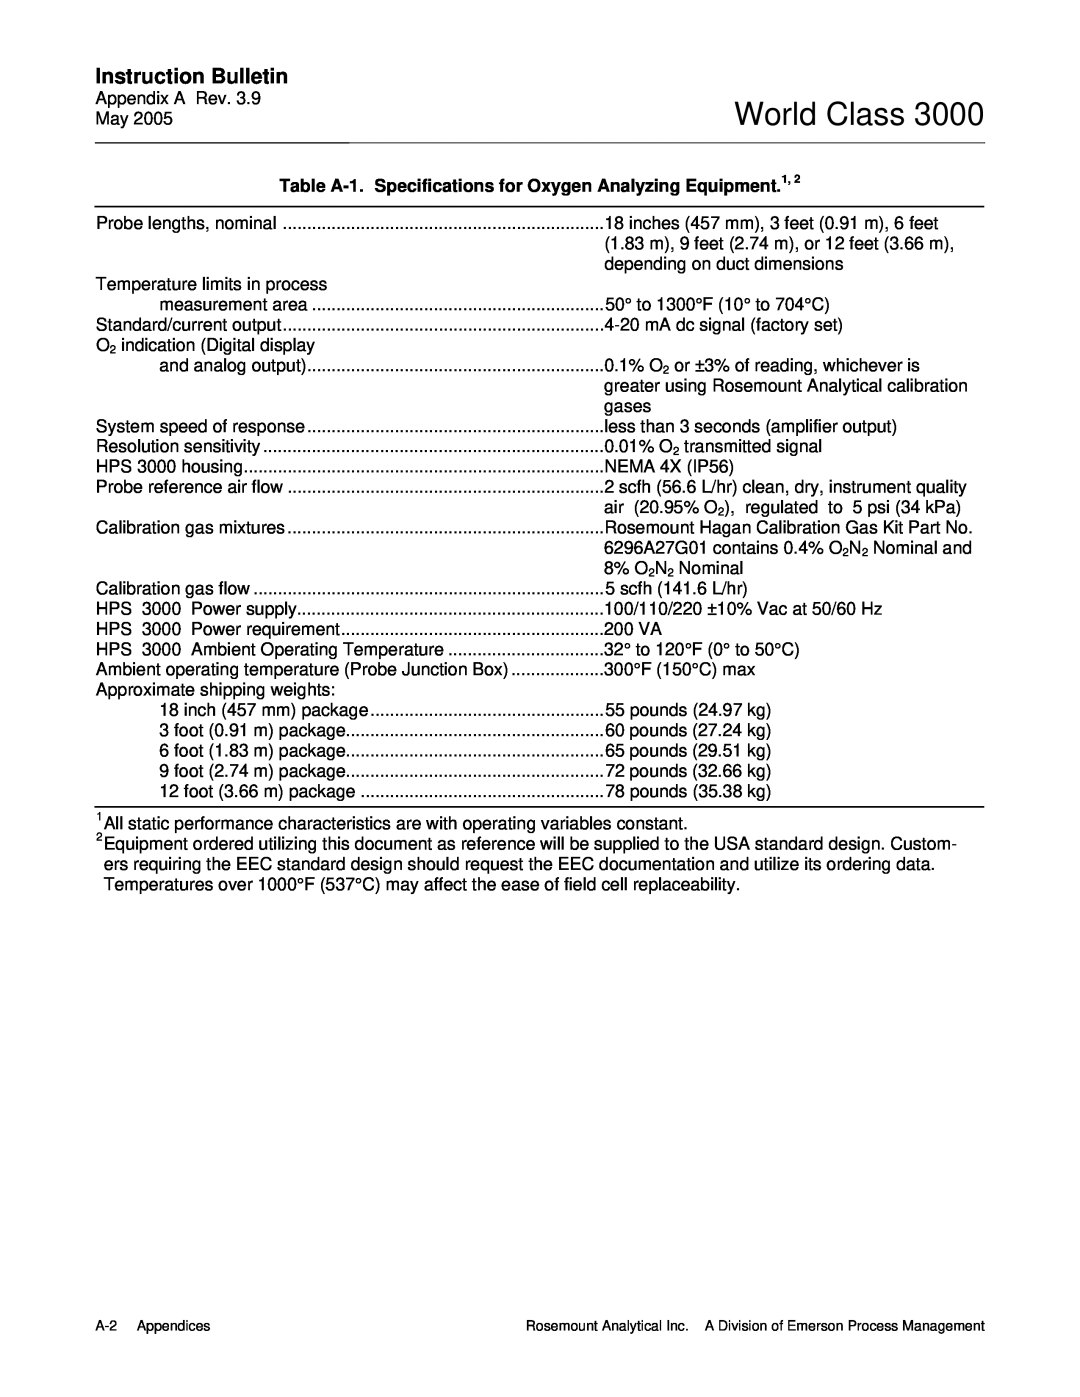 Emerson 3000 instruction manual World Class, Instruction Bulletin, Appendix A Rev. 3.9 May 